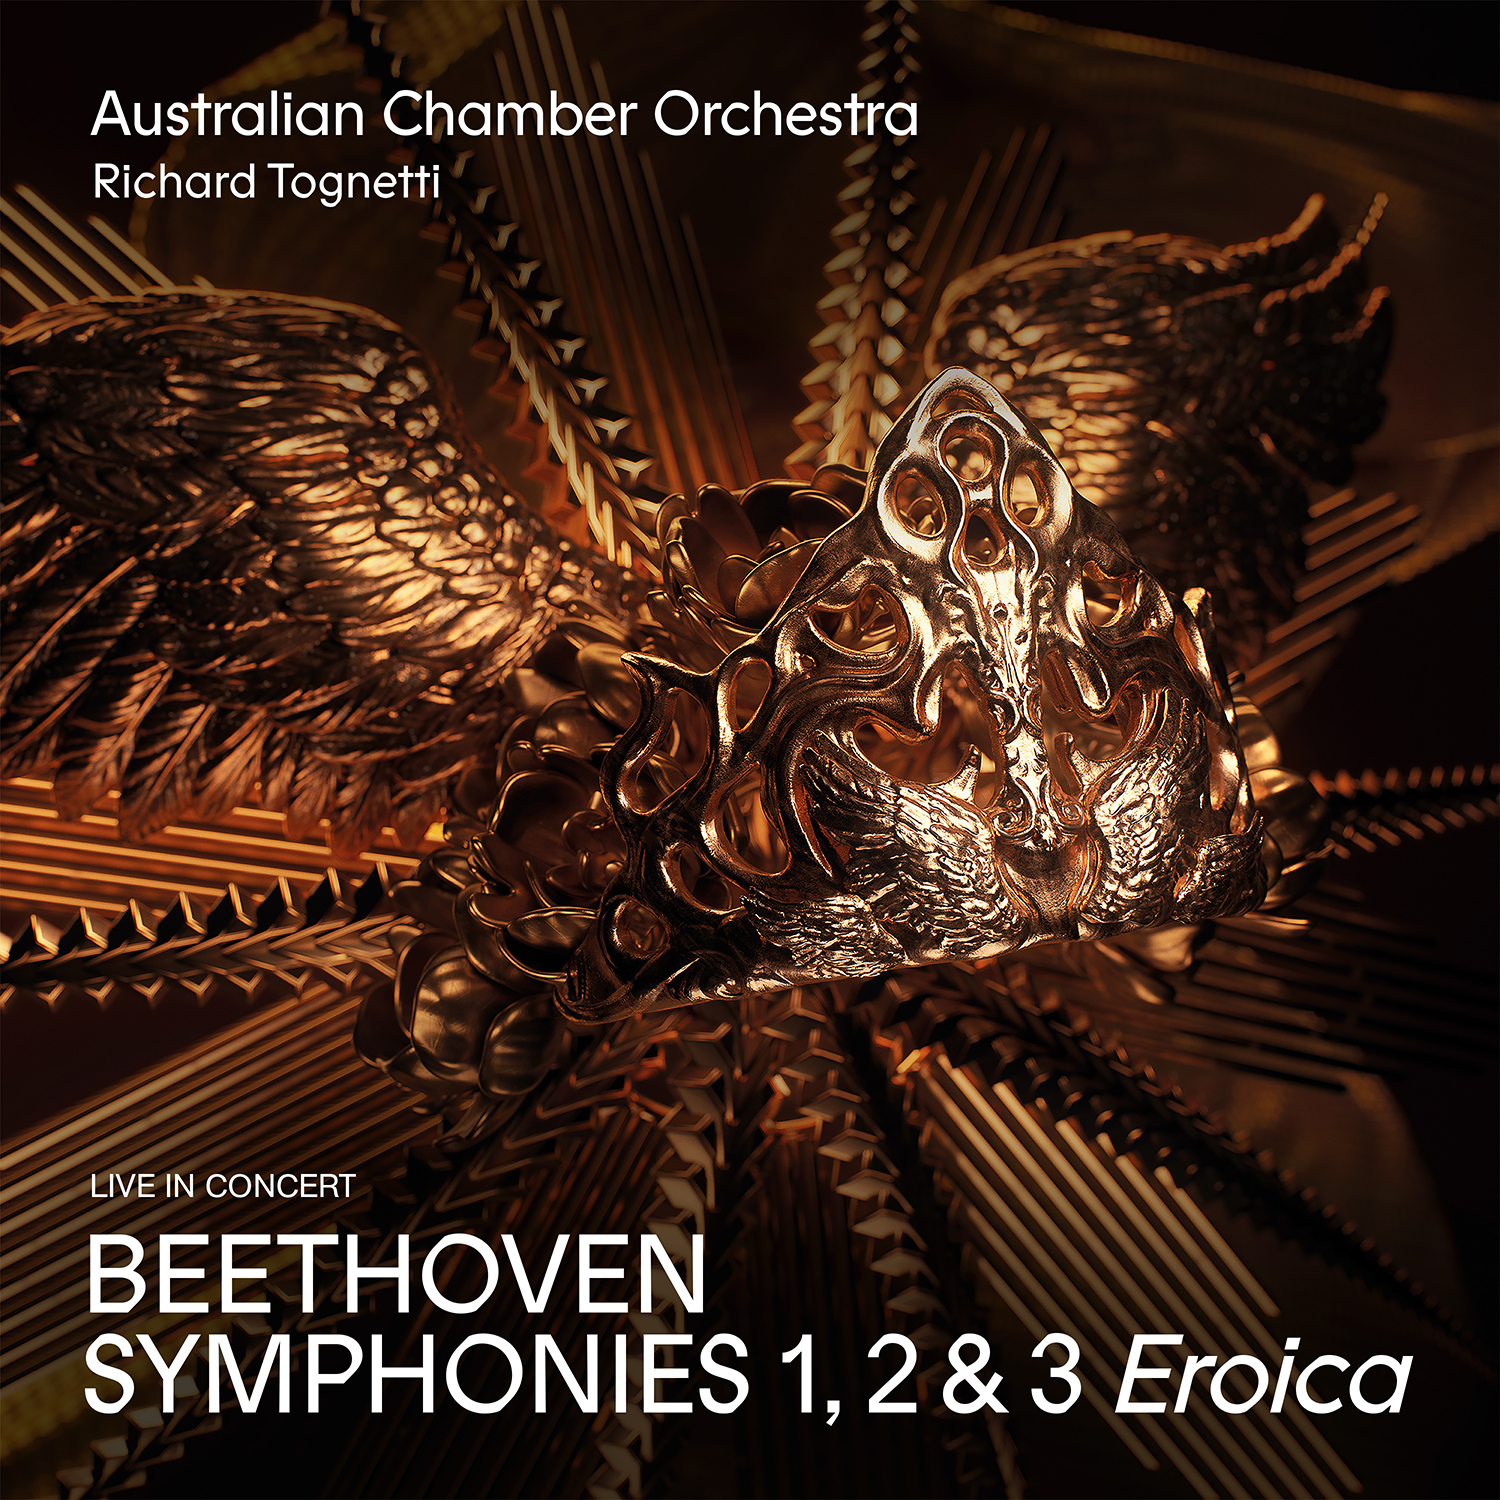 Beethoven's Symphonies 1, 2 & 3 'Eroica'